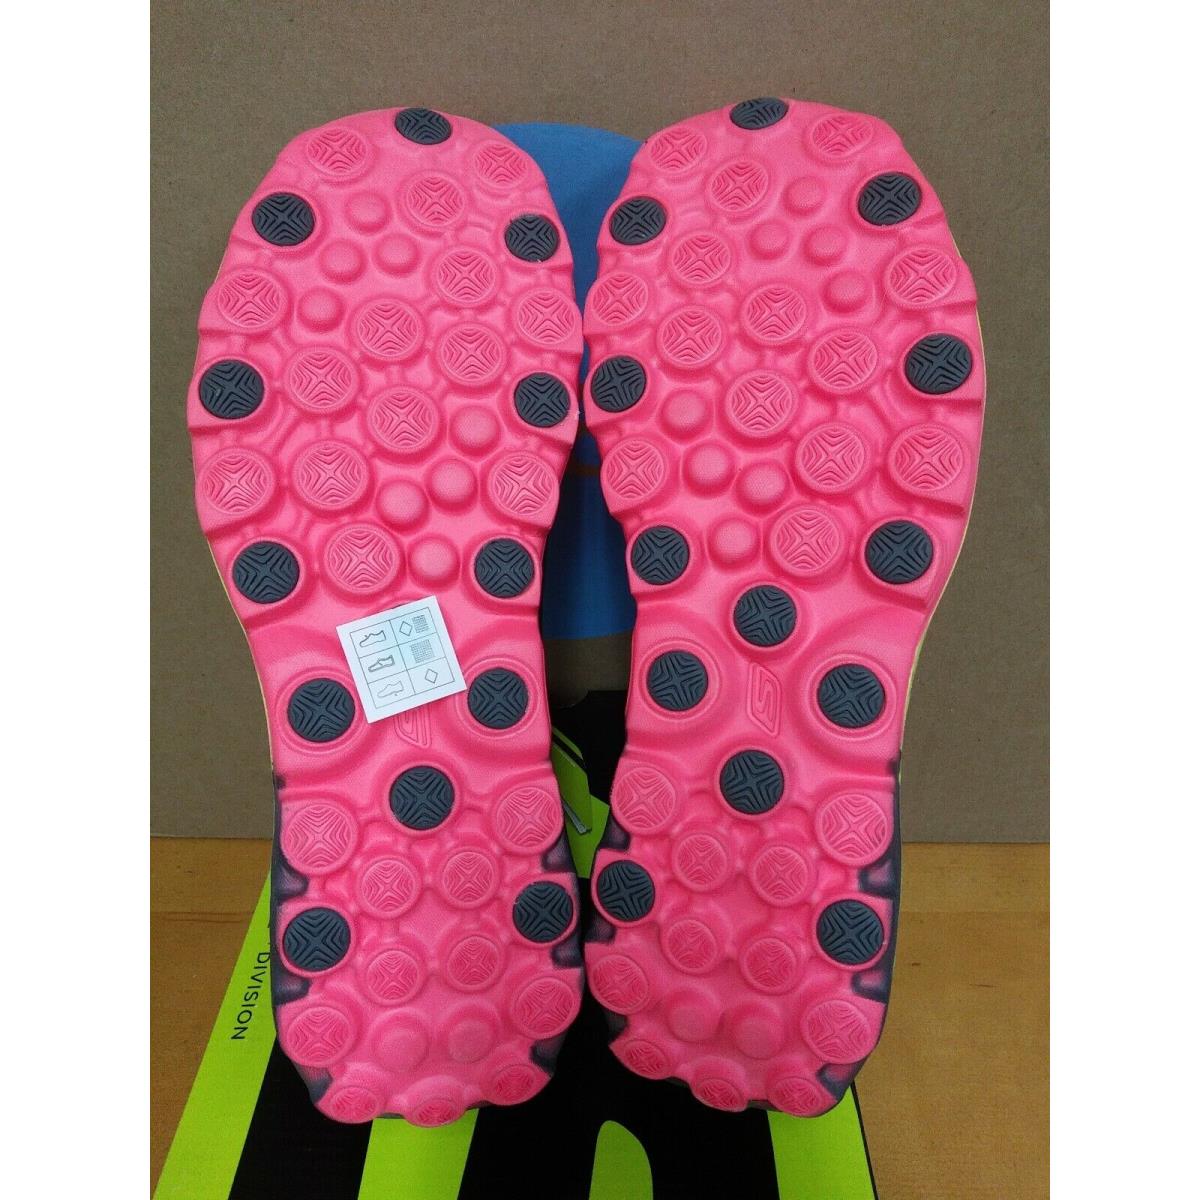 Skechers shoes Run Supreme - Charcoal Hot Pink 5